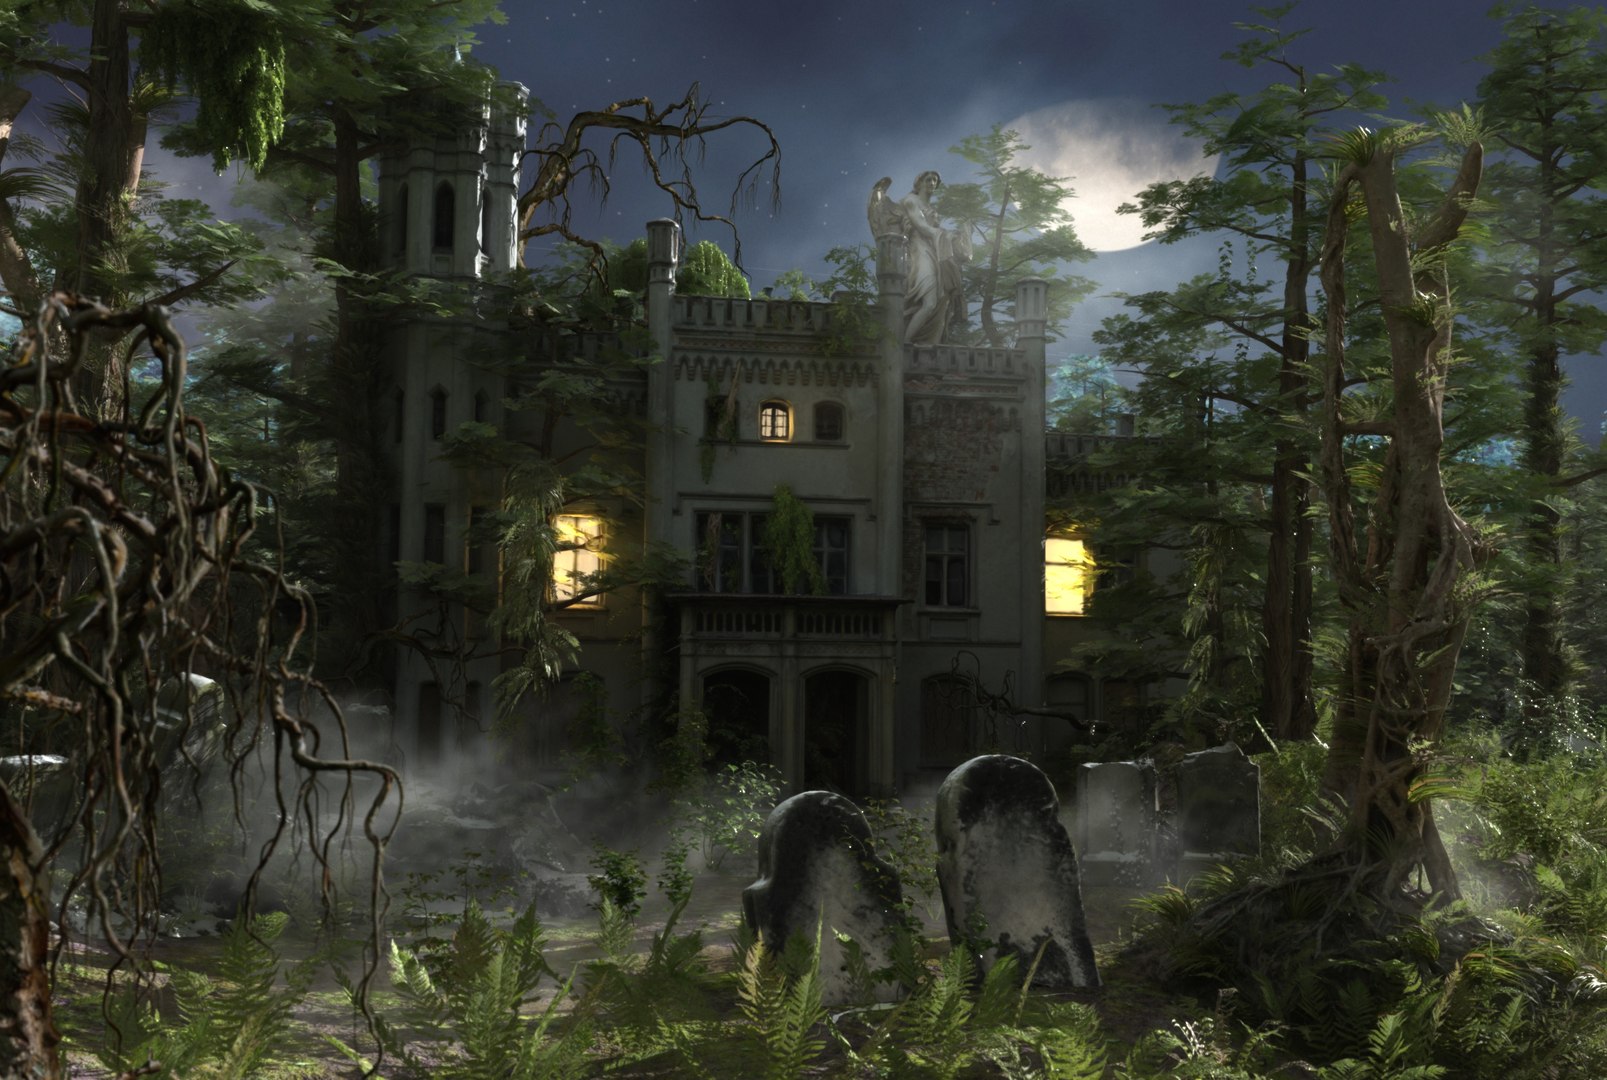 GitHub - Singh233/Haunted-House-ThreeJs: A haunted house scene